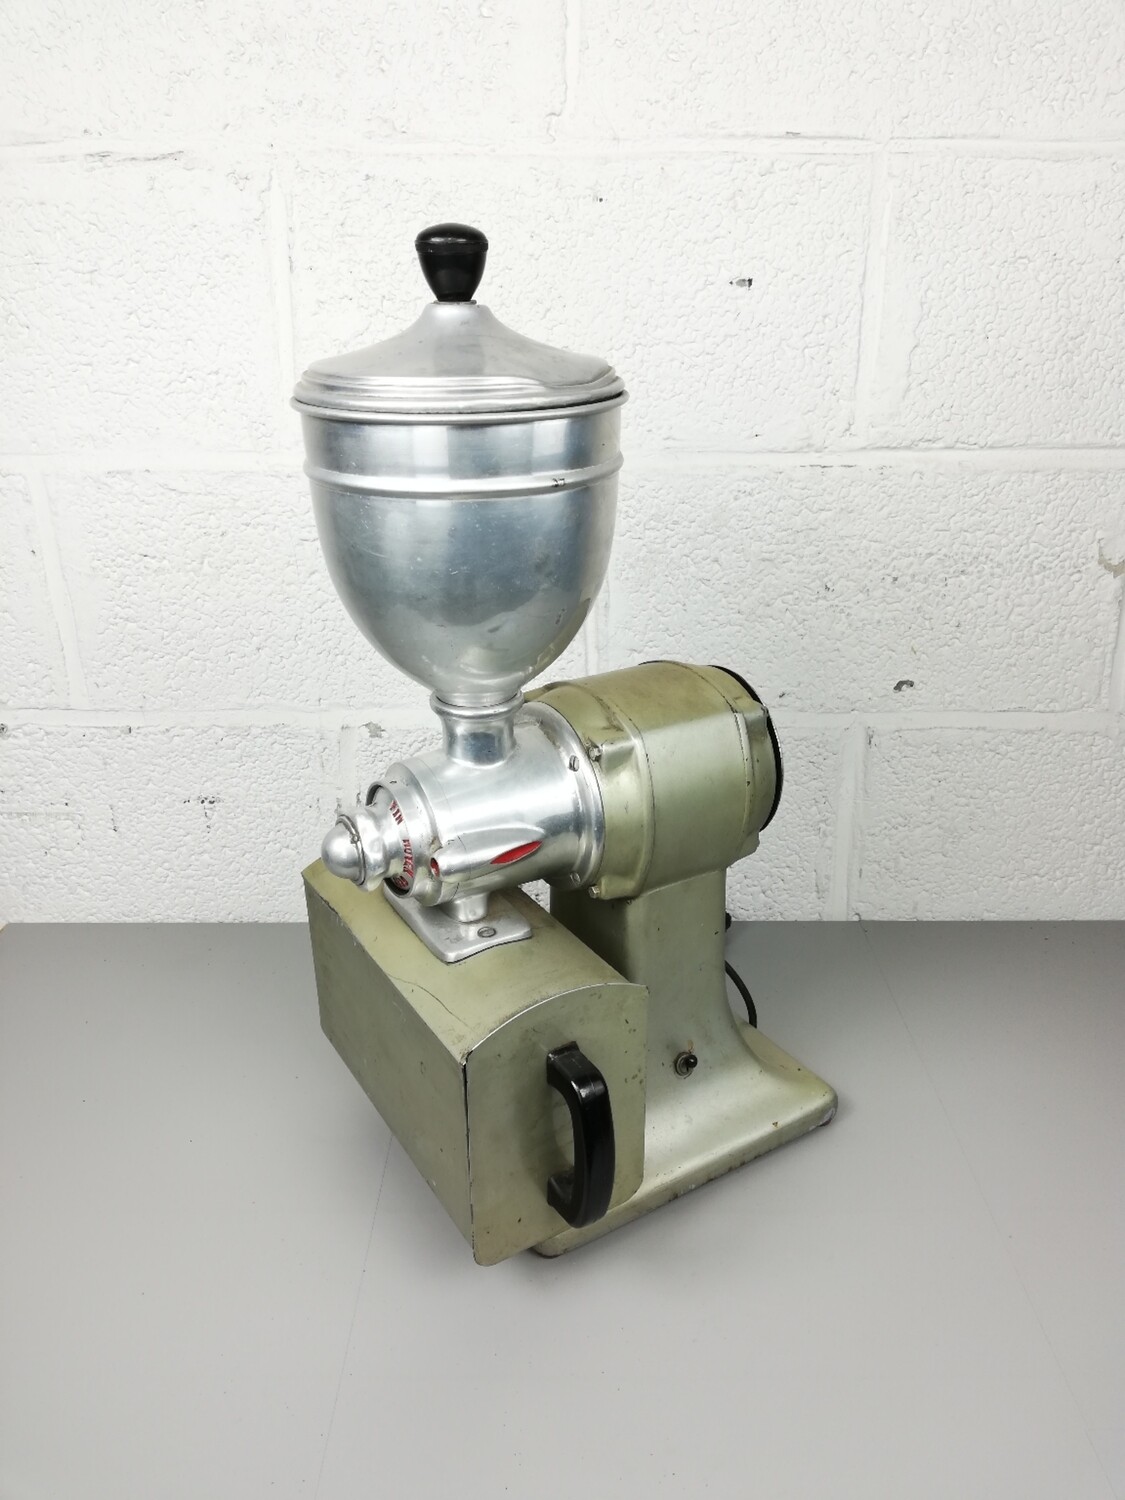 Large electric coffee grinder